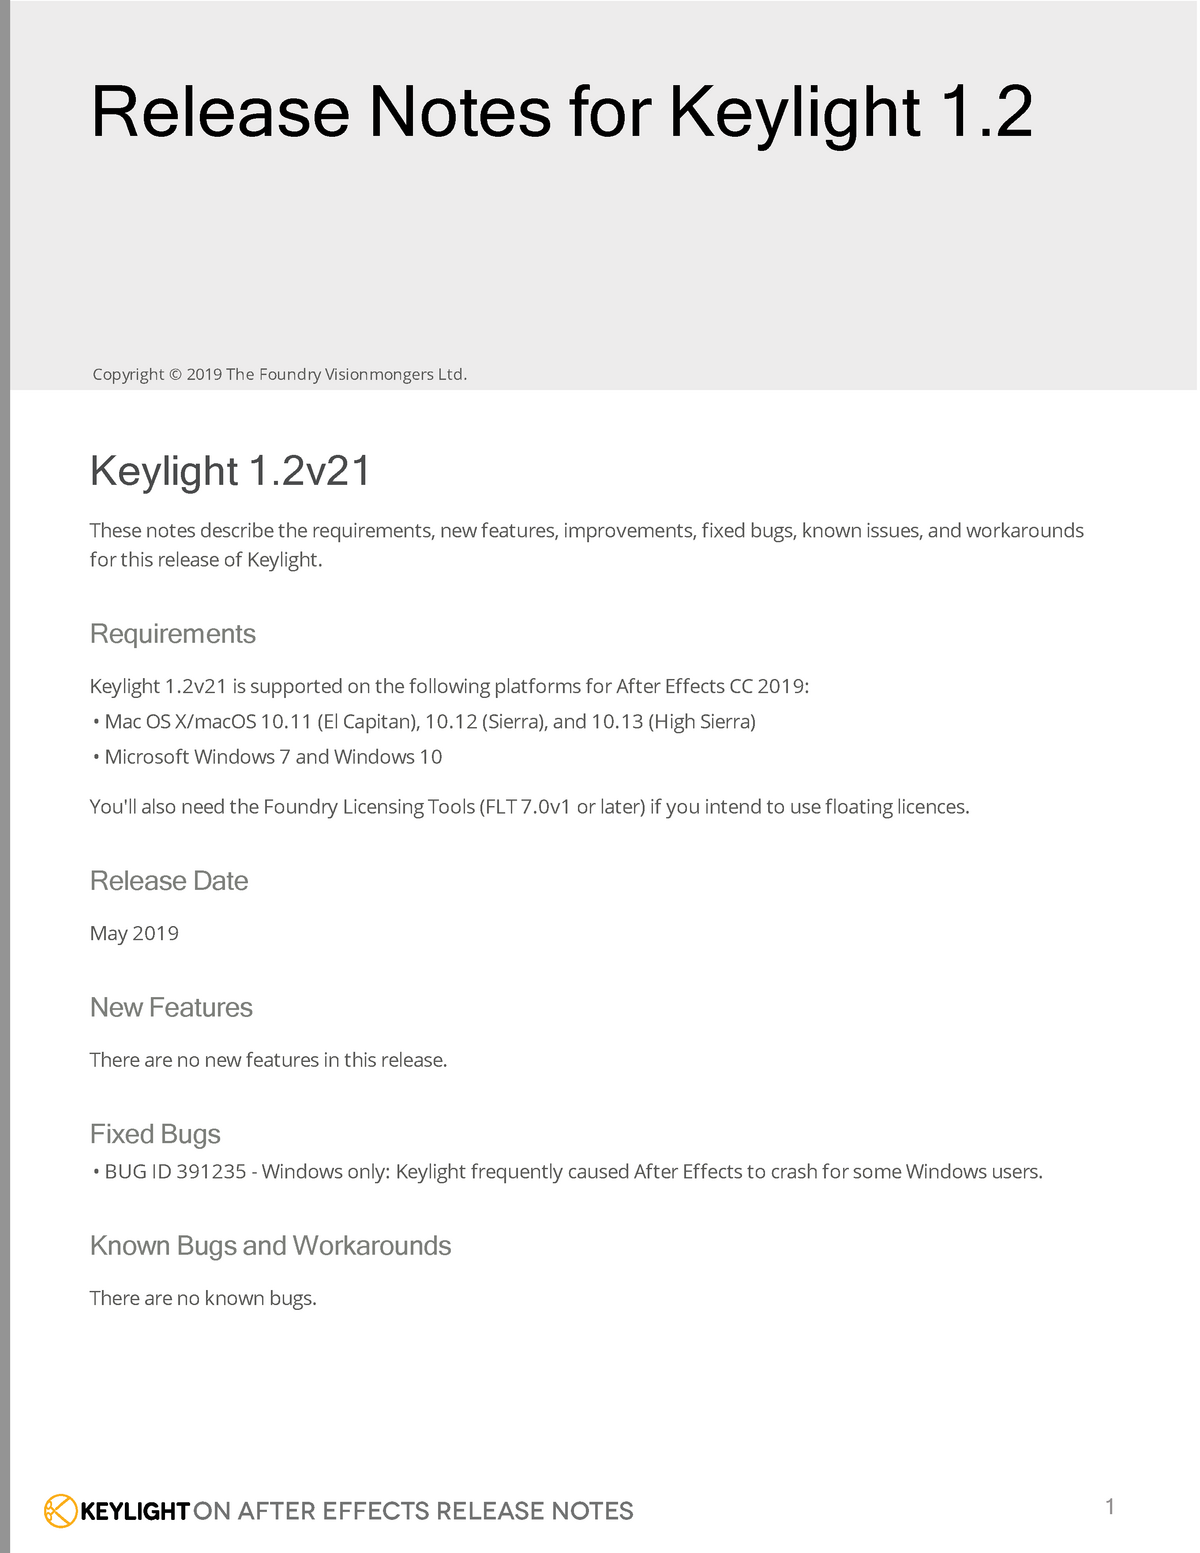 keylight 1.2 crash